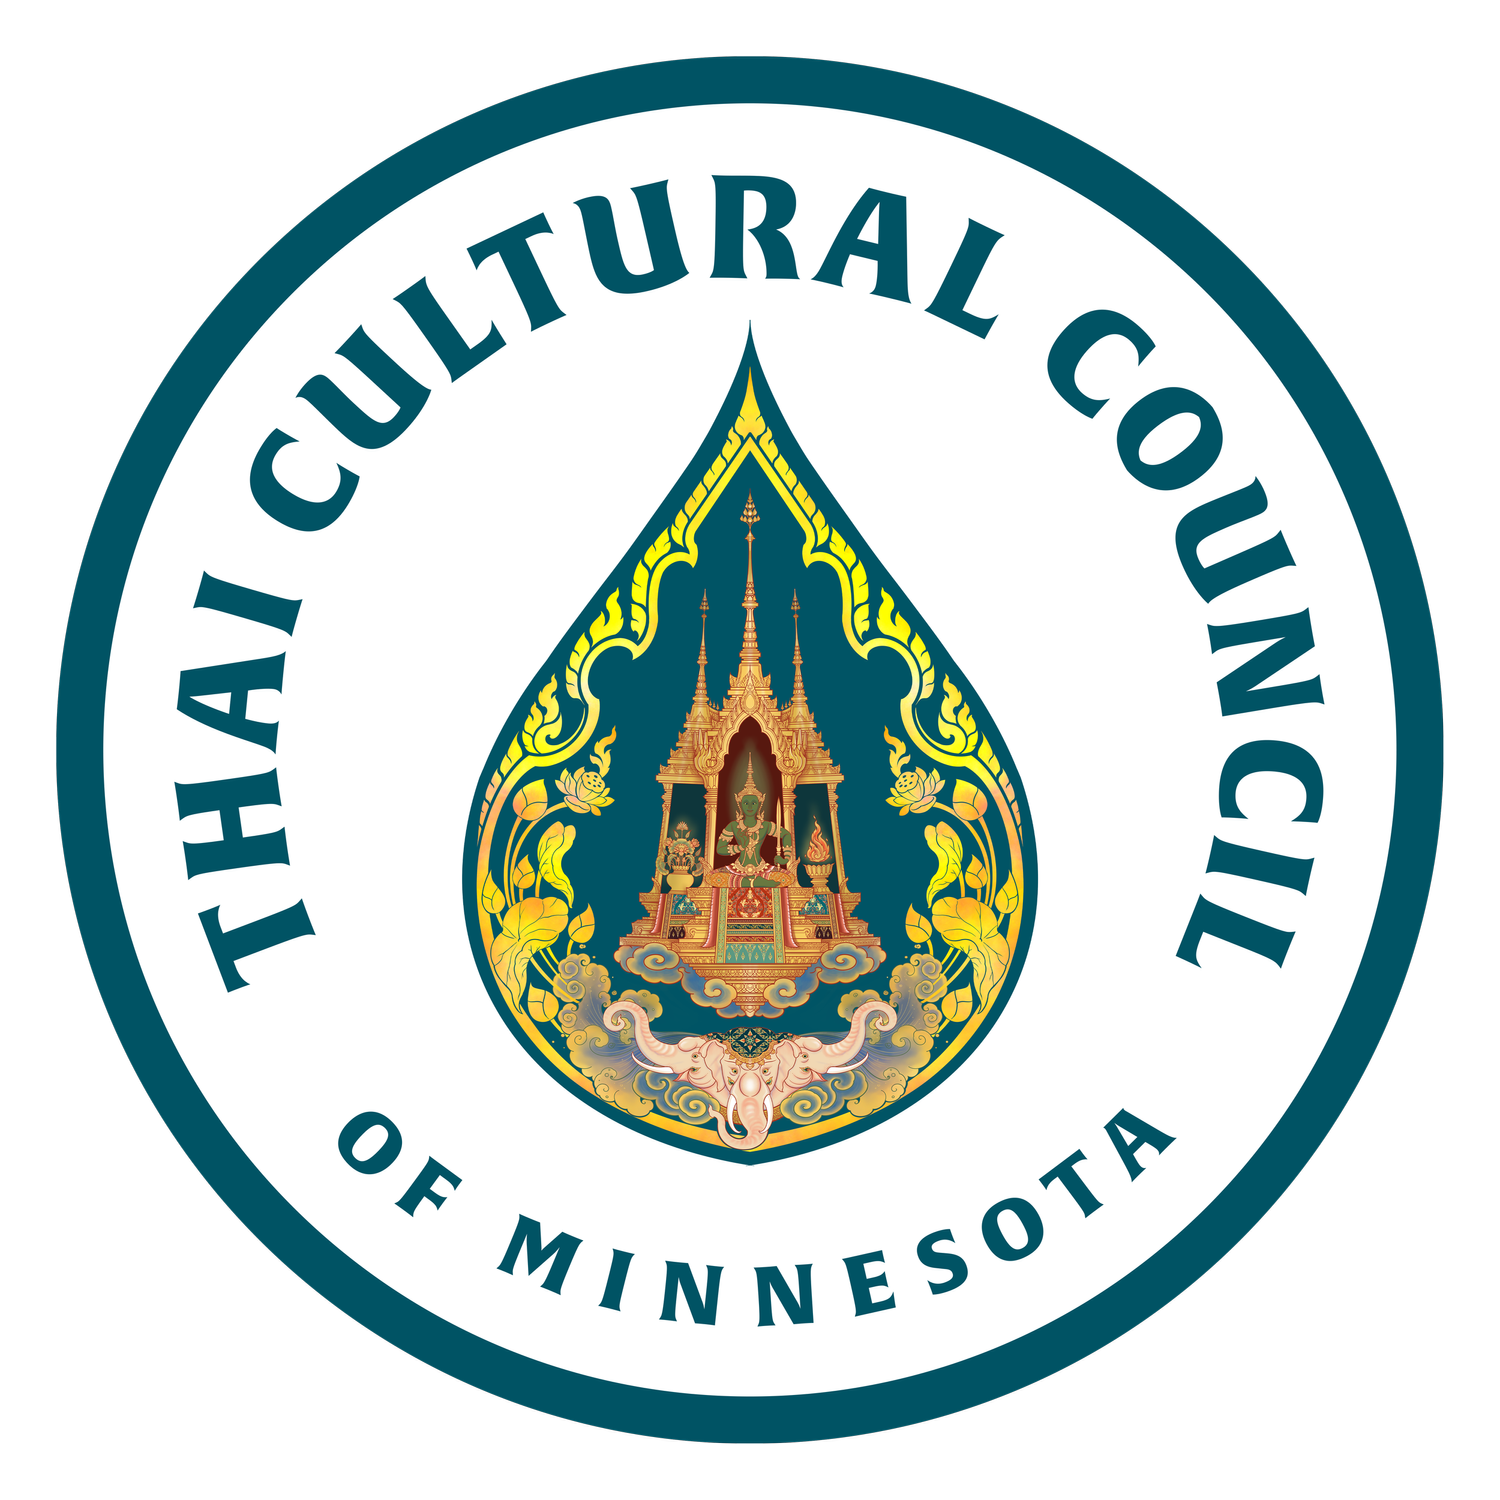 Thai Cultural Council of Minnesota